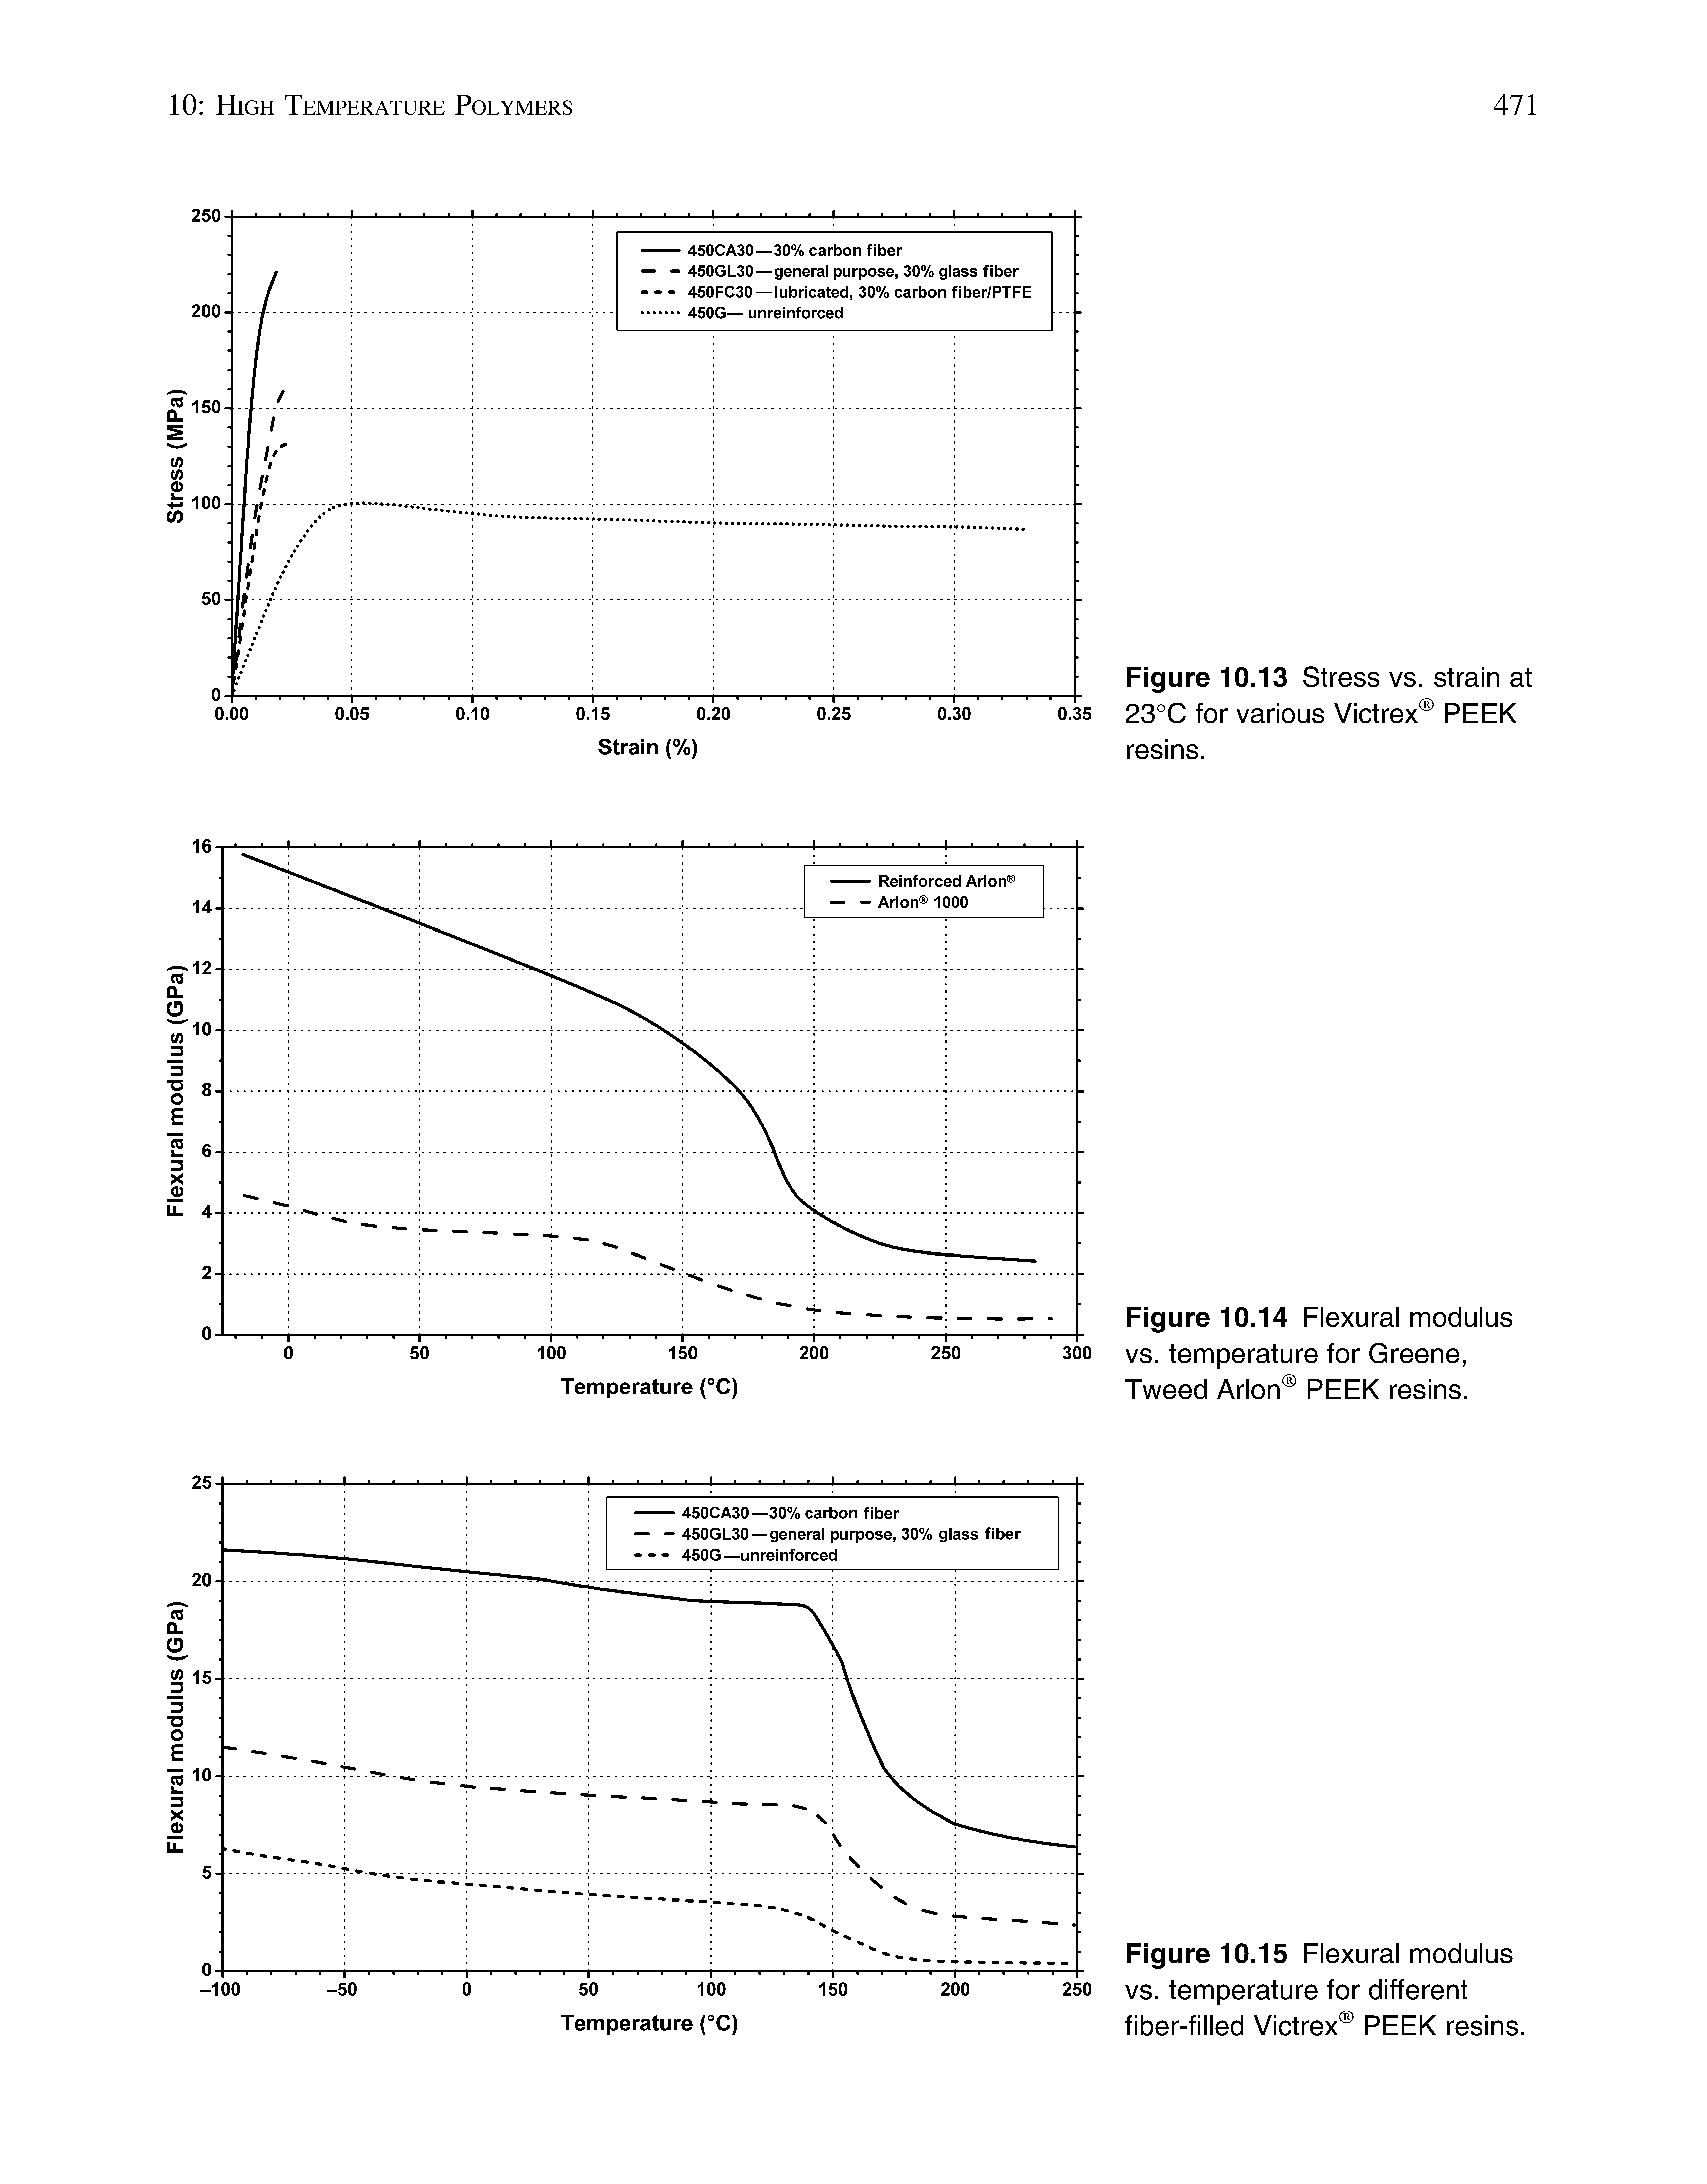 Figure 10.15 Flexural modulus vs. temperature for different fiber-filled Victrex PEEK resins.